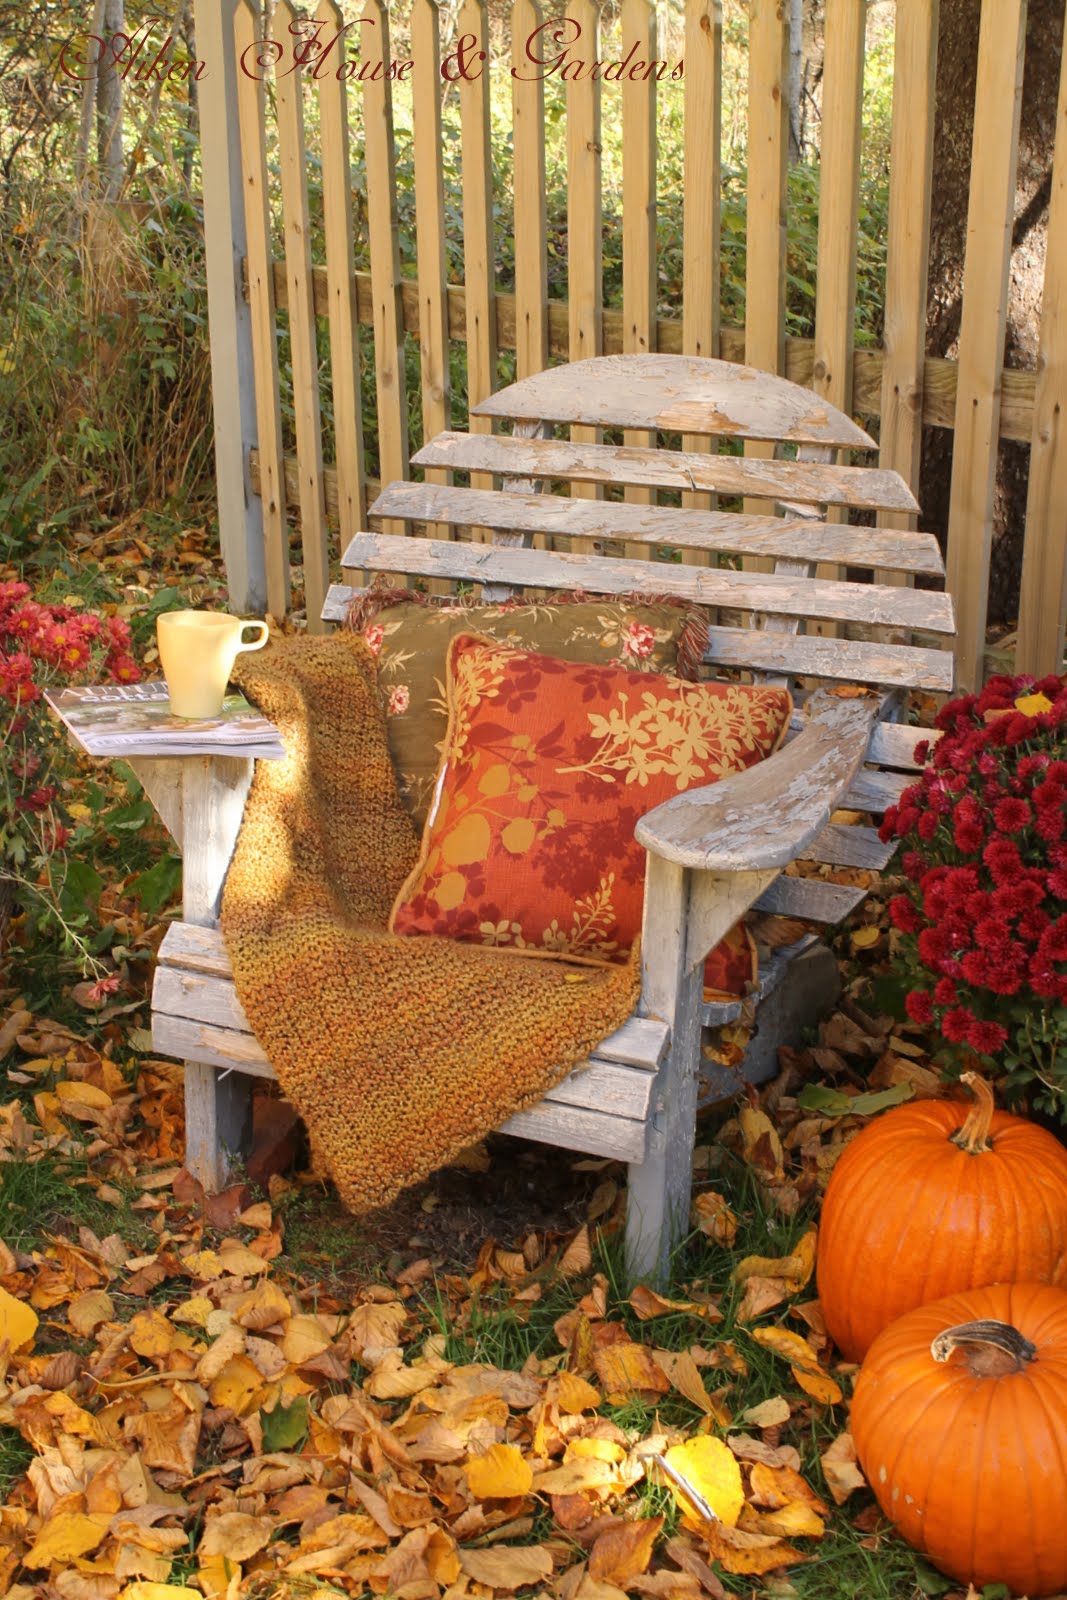 Aiken House & Gardens: Sunny Autumn Respite